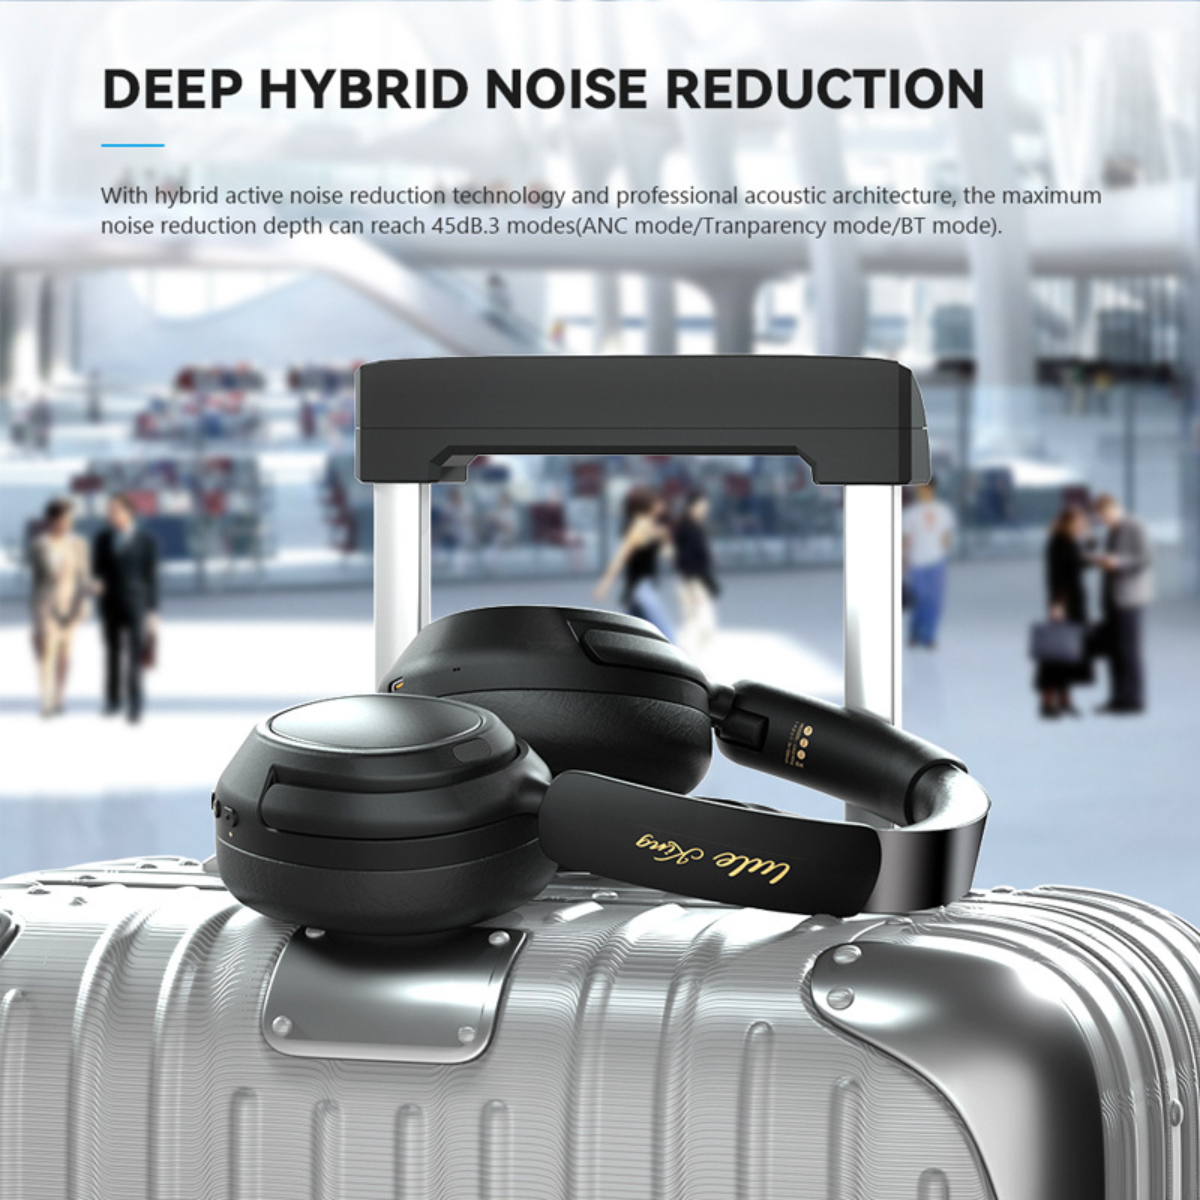 SYNTEK Eisenhaltig drahtloses Bluetooth-Headset Eisenhaltig Bluetooth-Kopfhörer Latenz, geräuschunterdrückender niedrige Bluetooth - Over-ear Kopfbügel